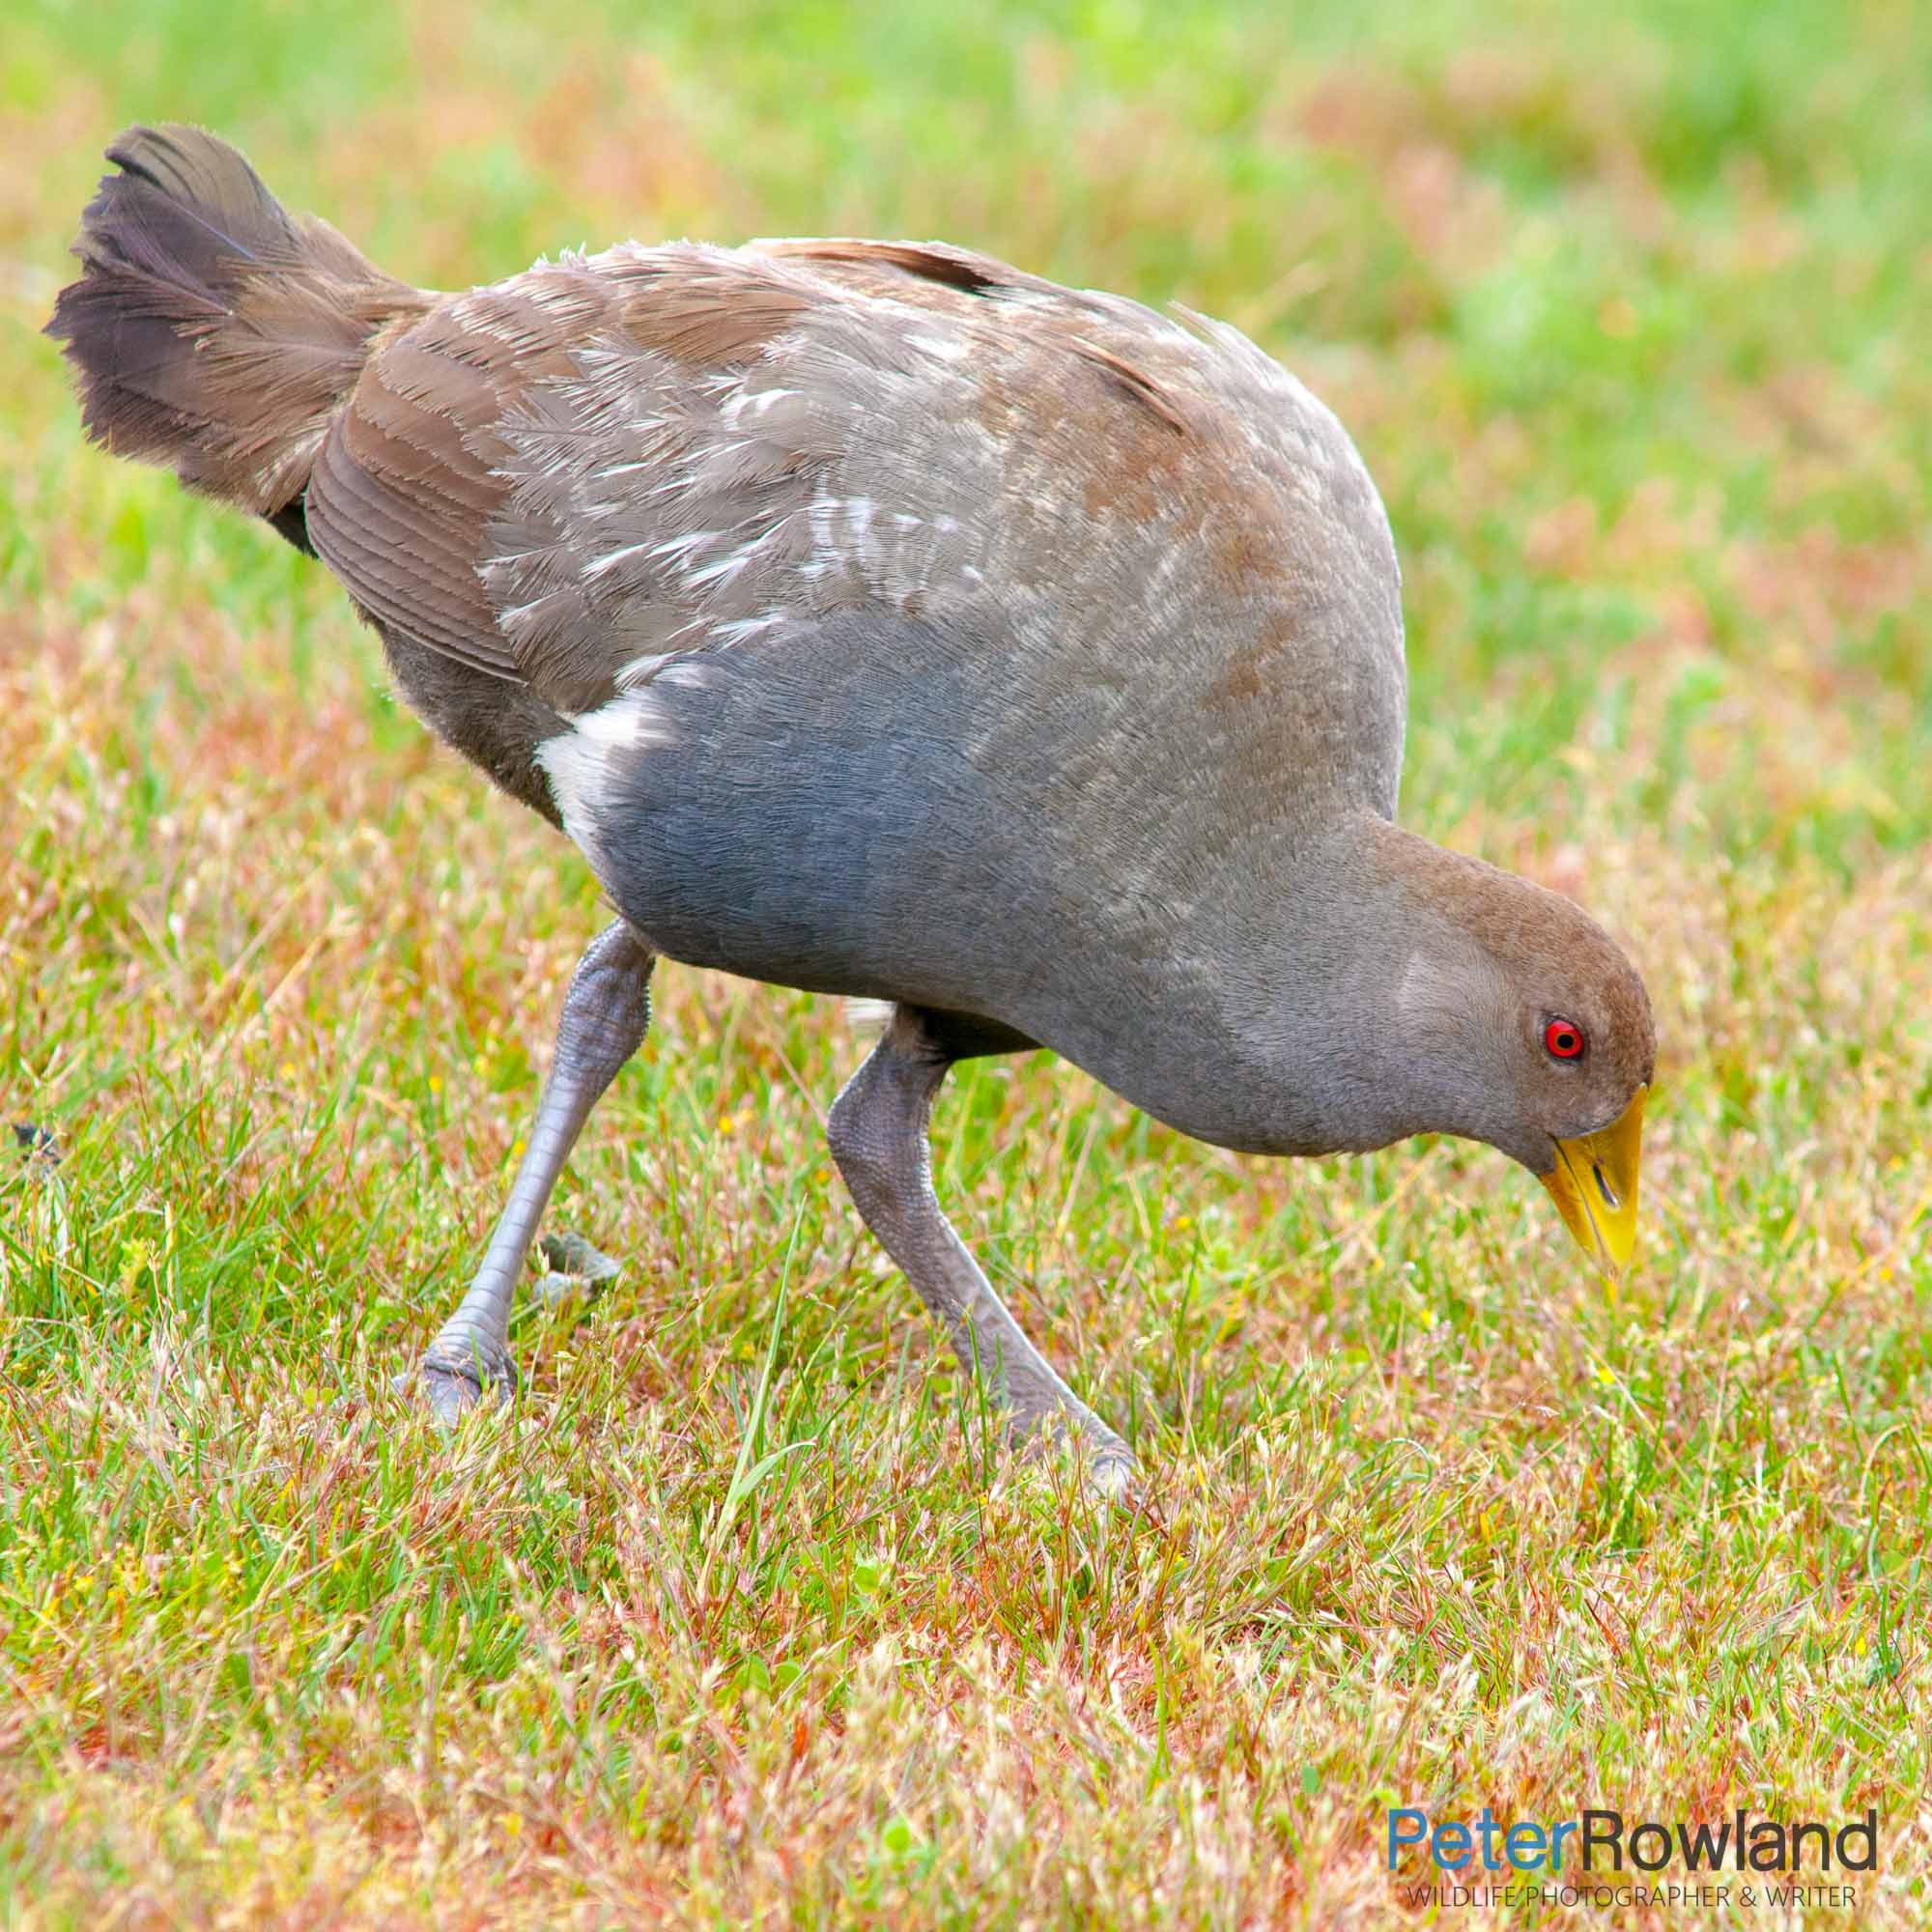 A Tasmanian Native-Hen (Tribonyx mortierii) looking for food in a grassy field